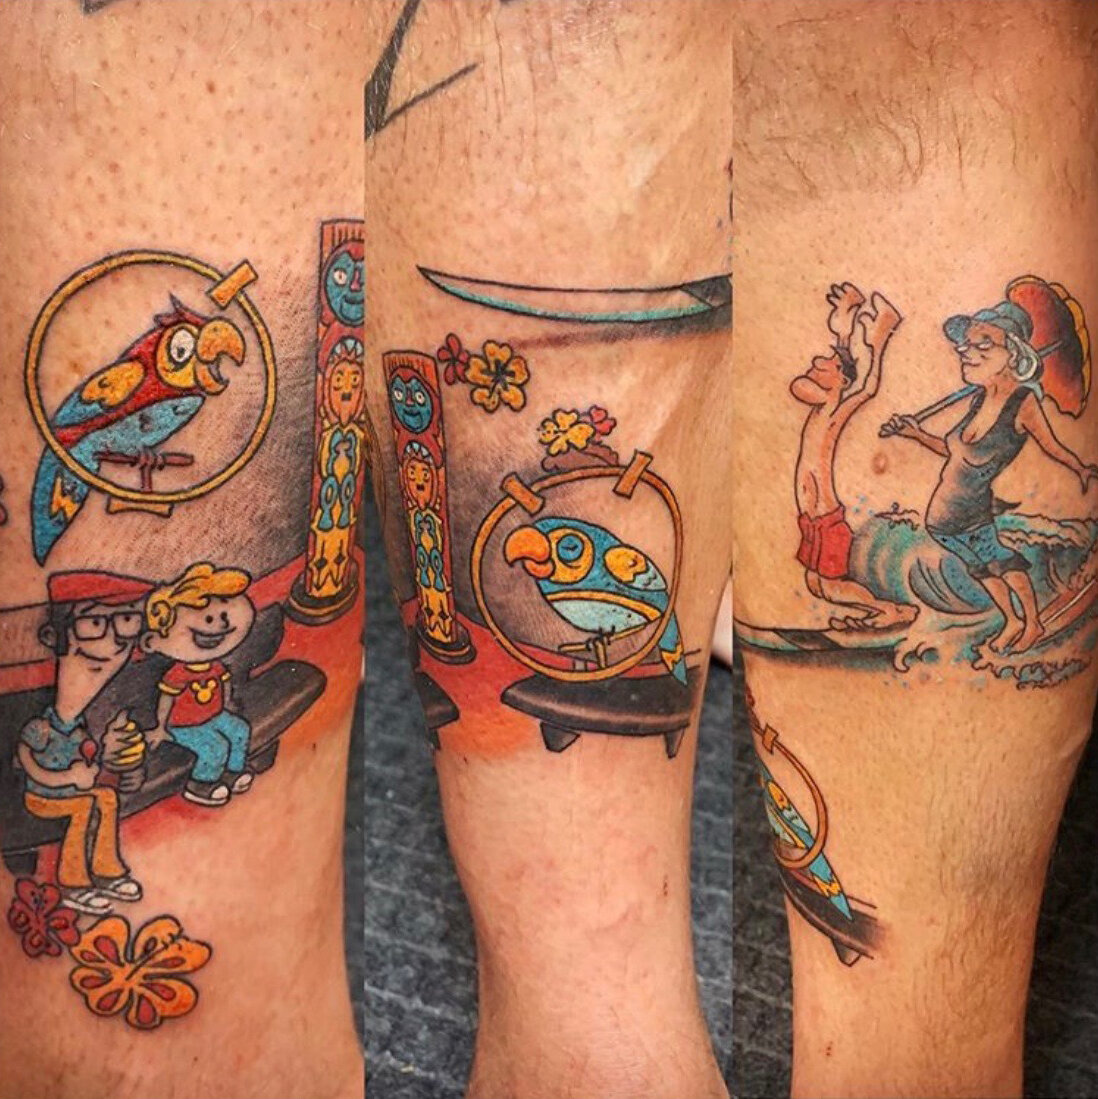 Tattoo uploaded by Ben Hart  Spongebob and Patrick  Tattoodo